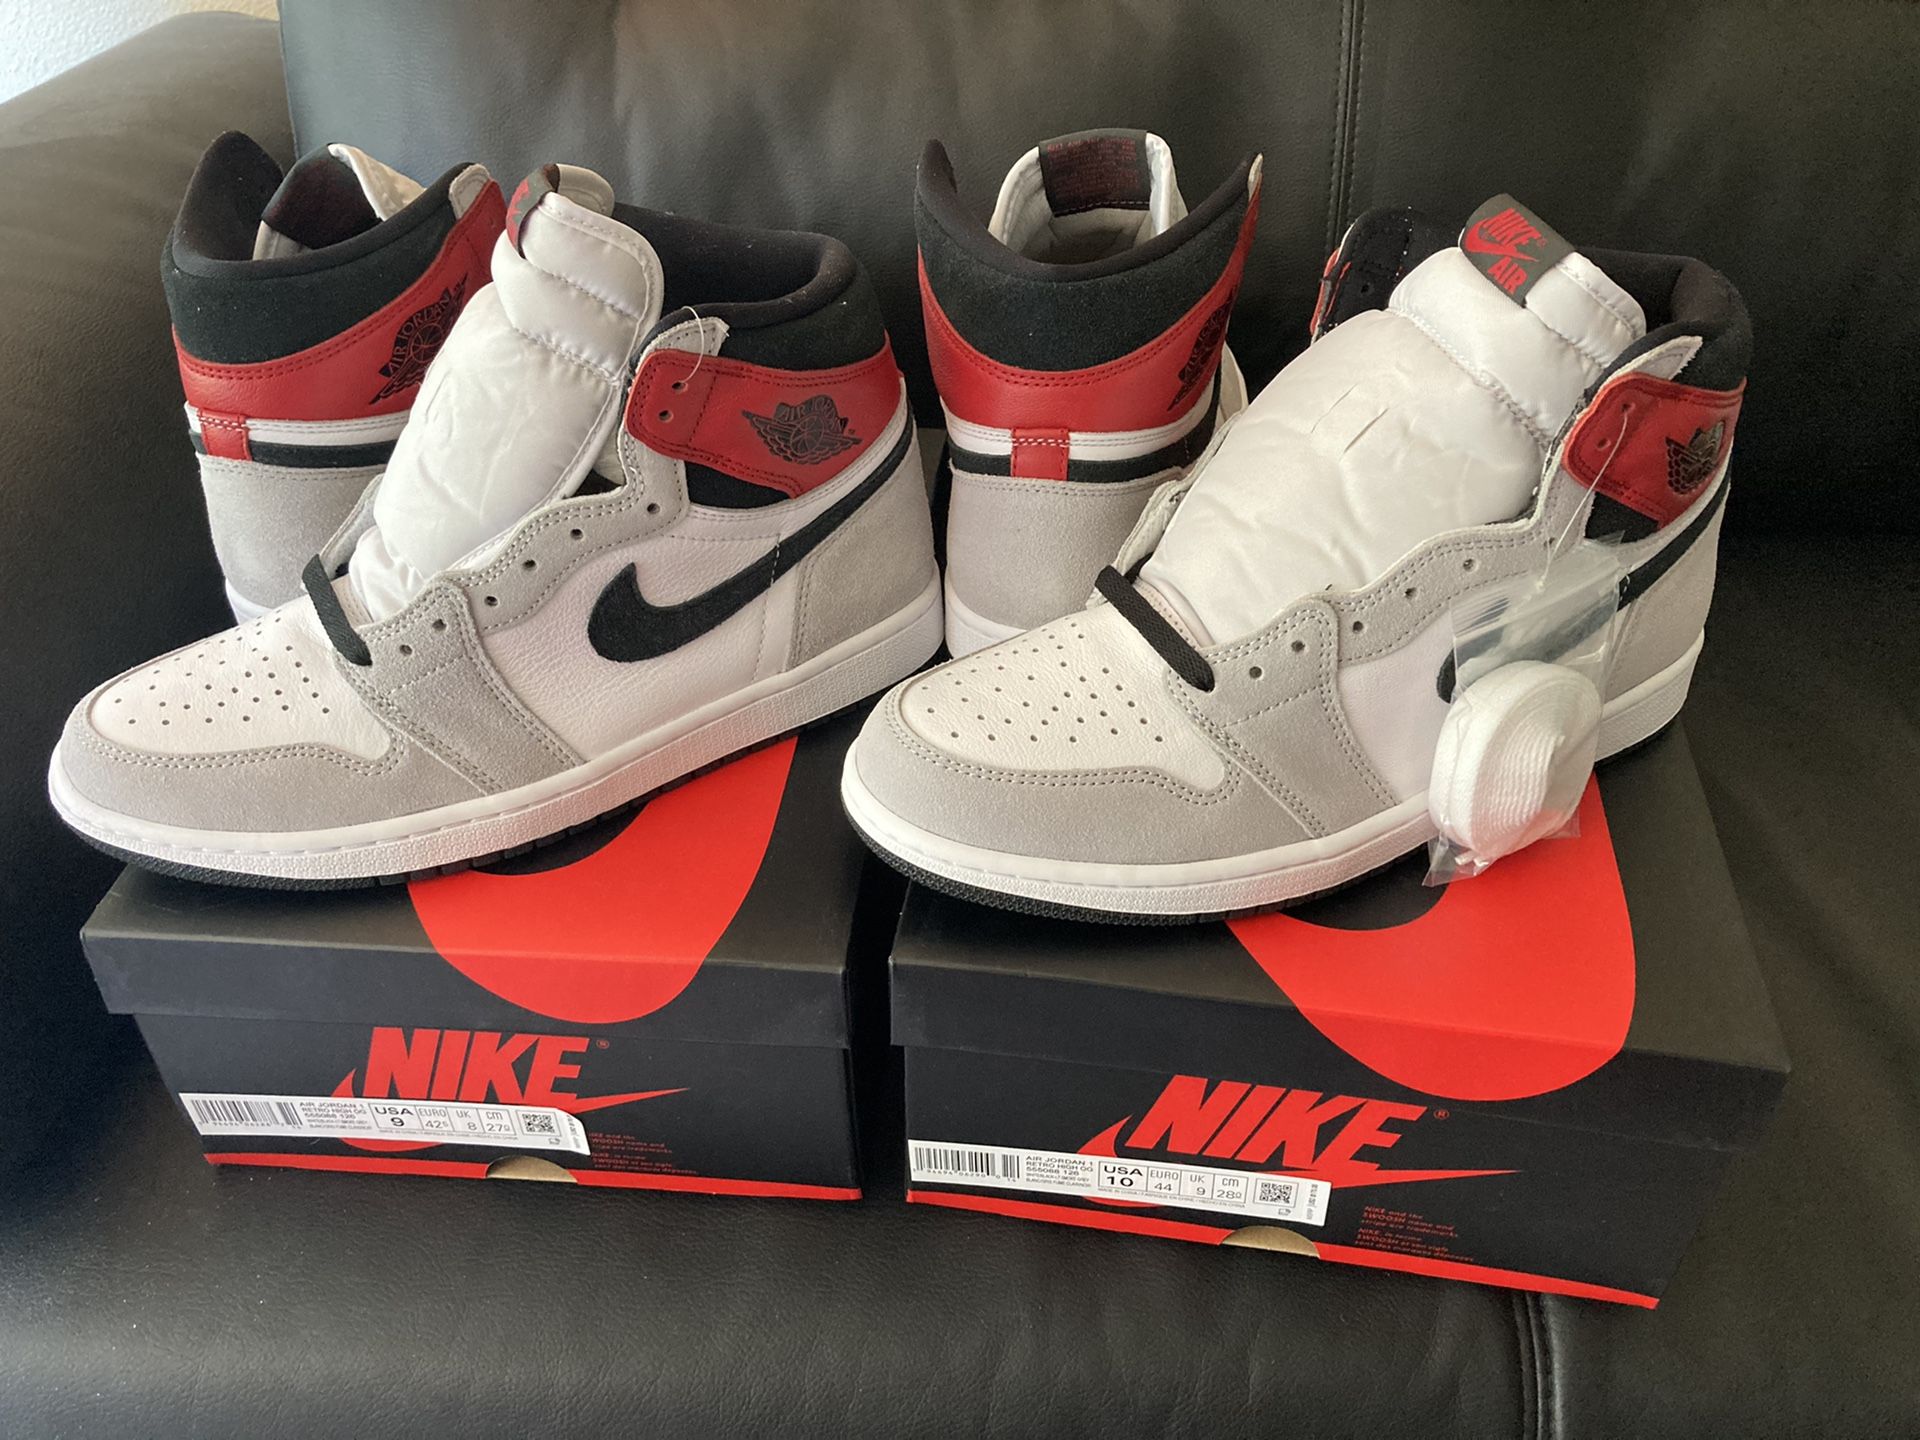 Nike Air Jordan Retro 1 High OG Light Smoke Grey Sizes 8, 9, 10